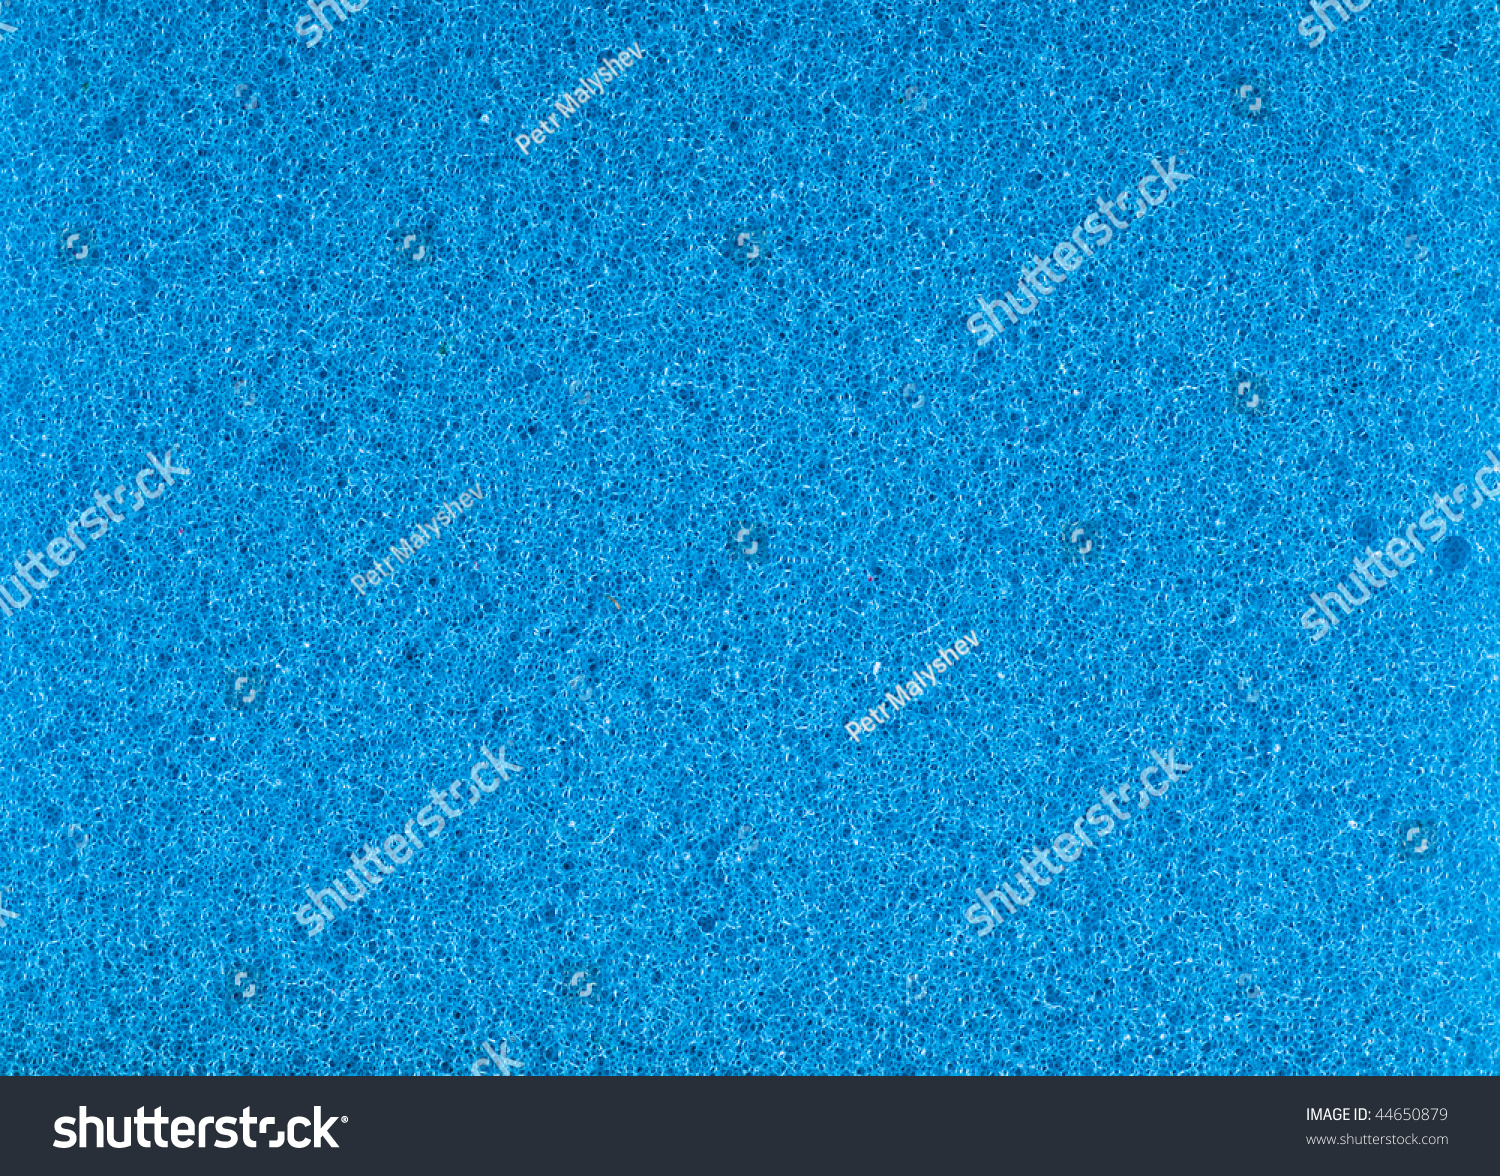 Blue Foam Rubber High Resolution Texture Stock Photo 44650879 ...